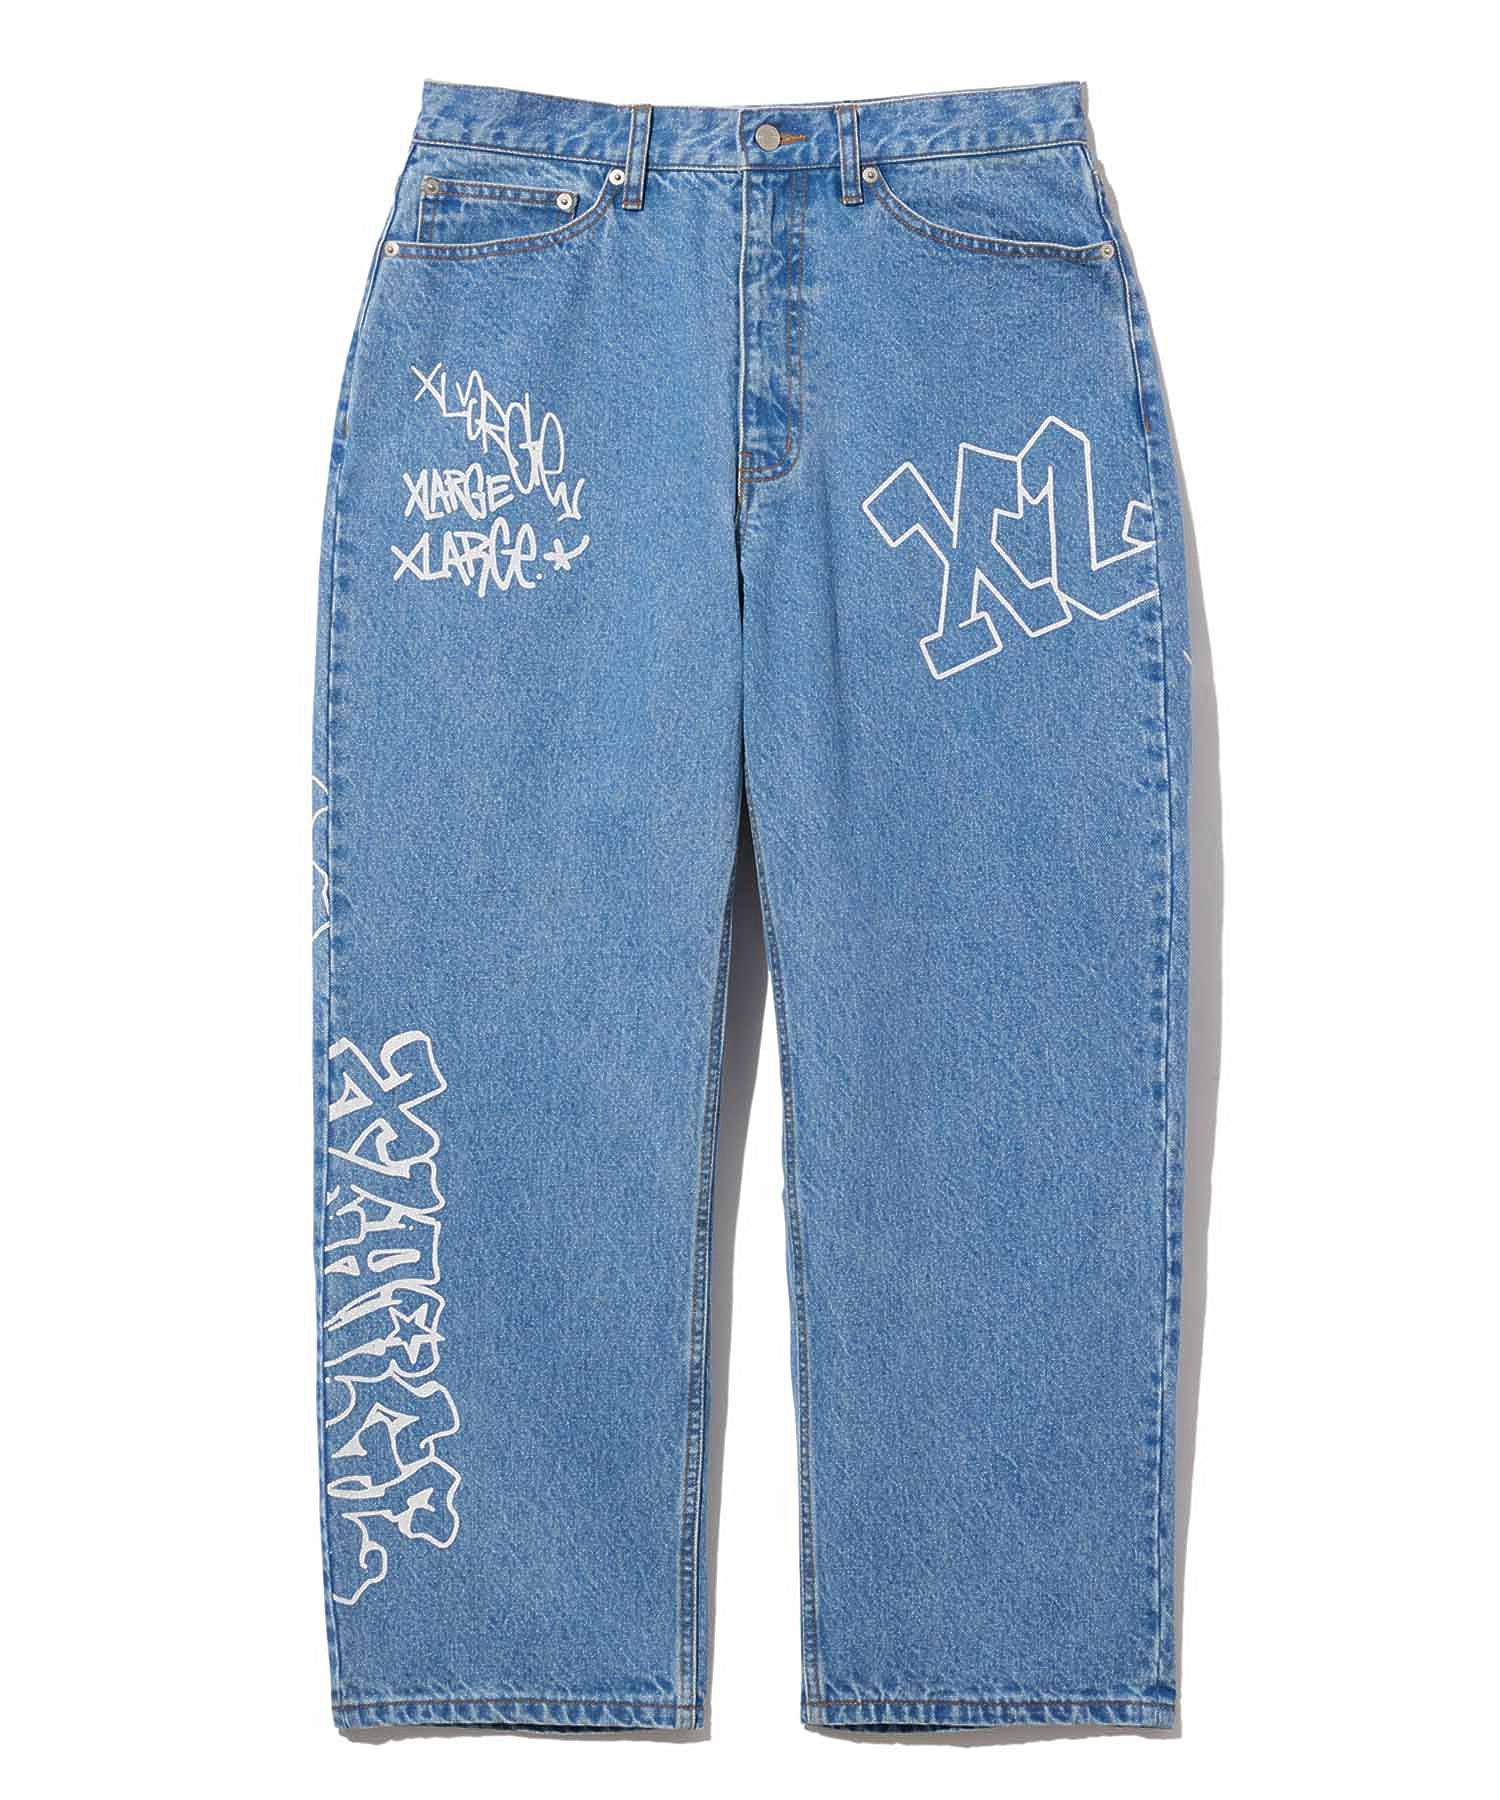 PERSONSOUL*23FW Graffiti Jeans XLサイズパンツ